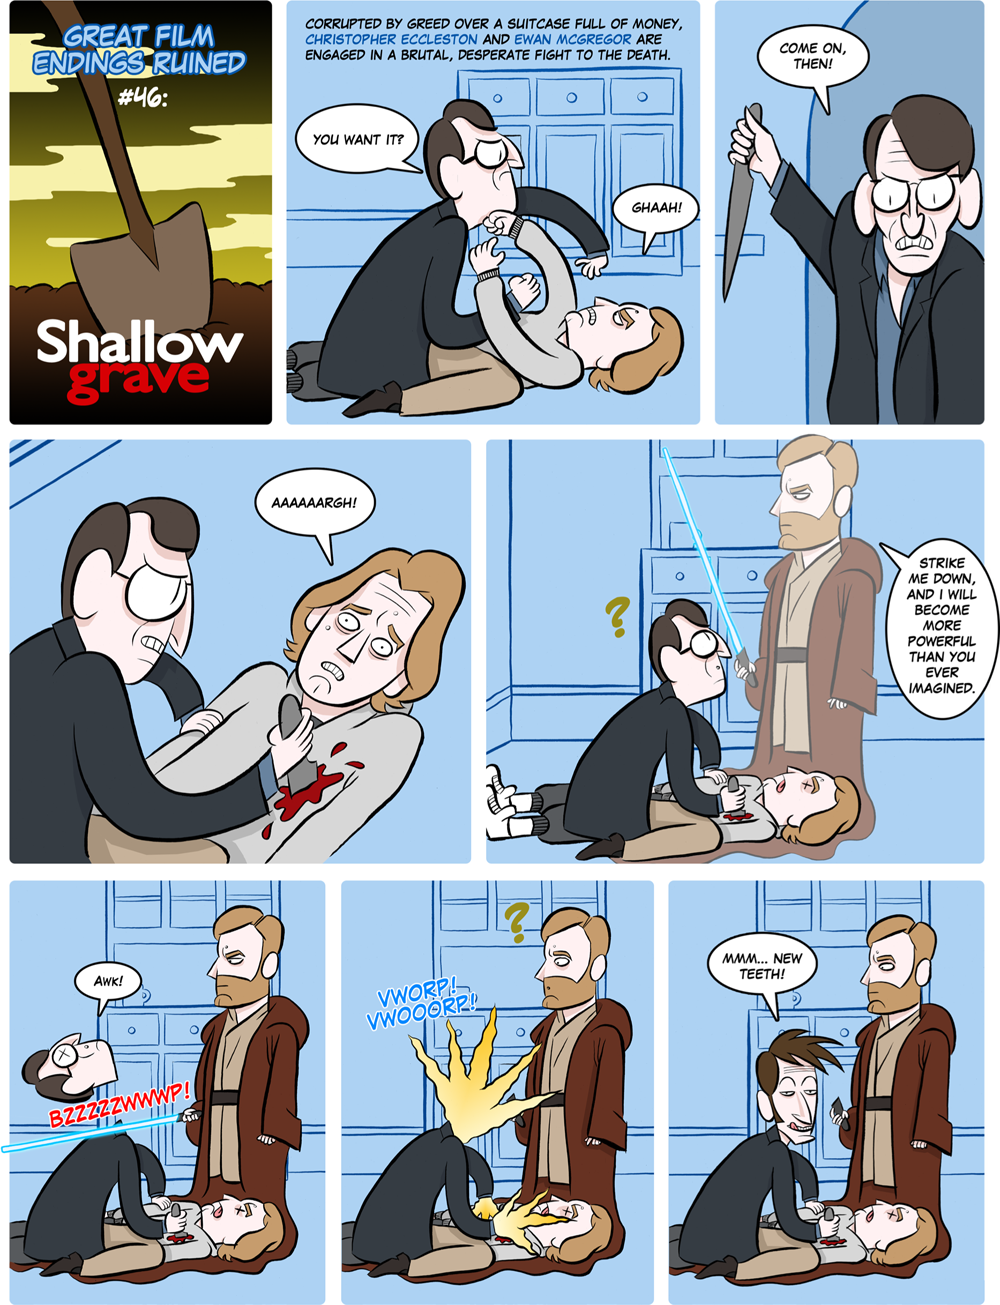 Comic: Shallow Grave Ending - Christopher Eccleston & Ewan McGregor fight to the death